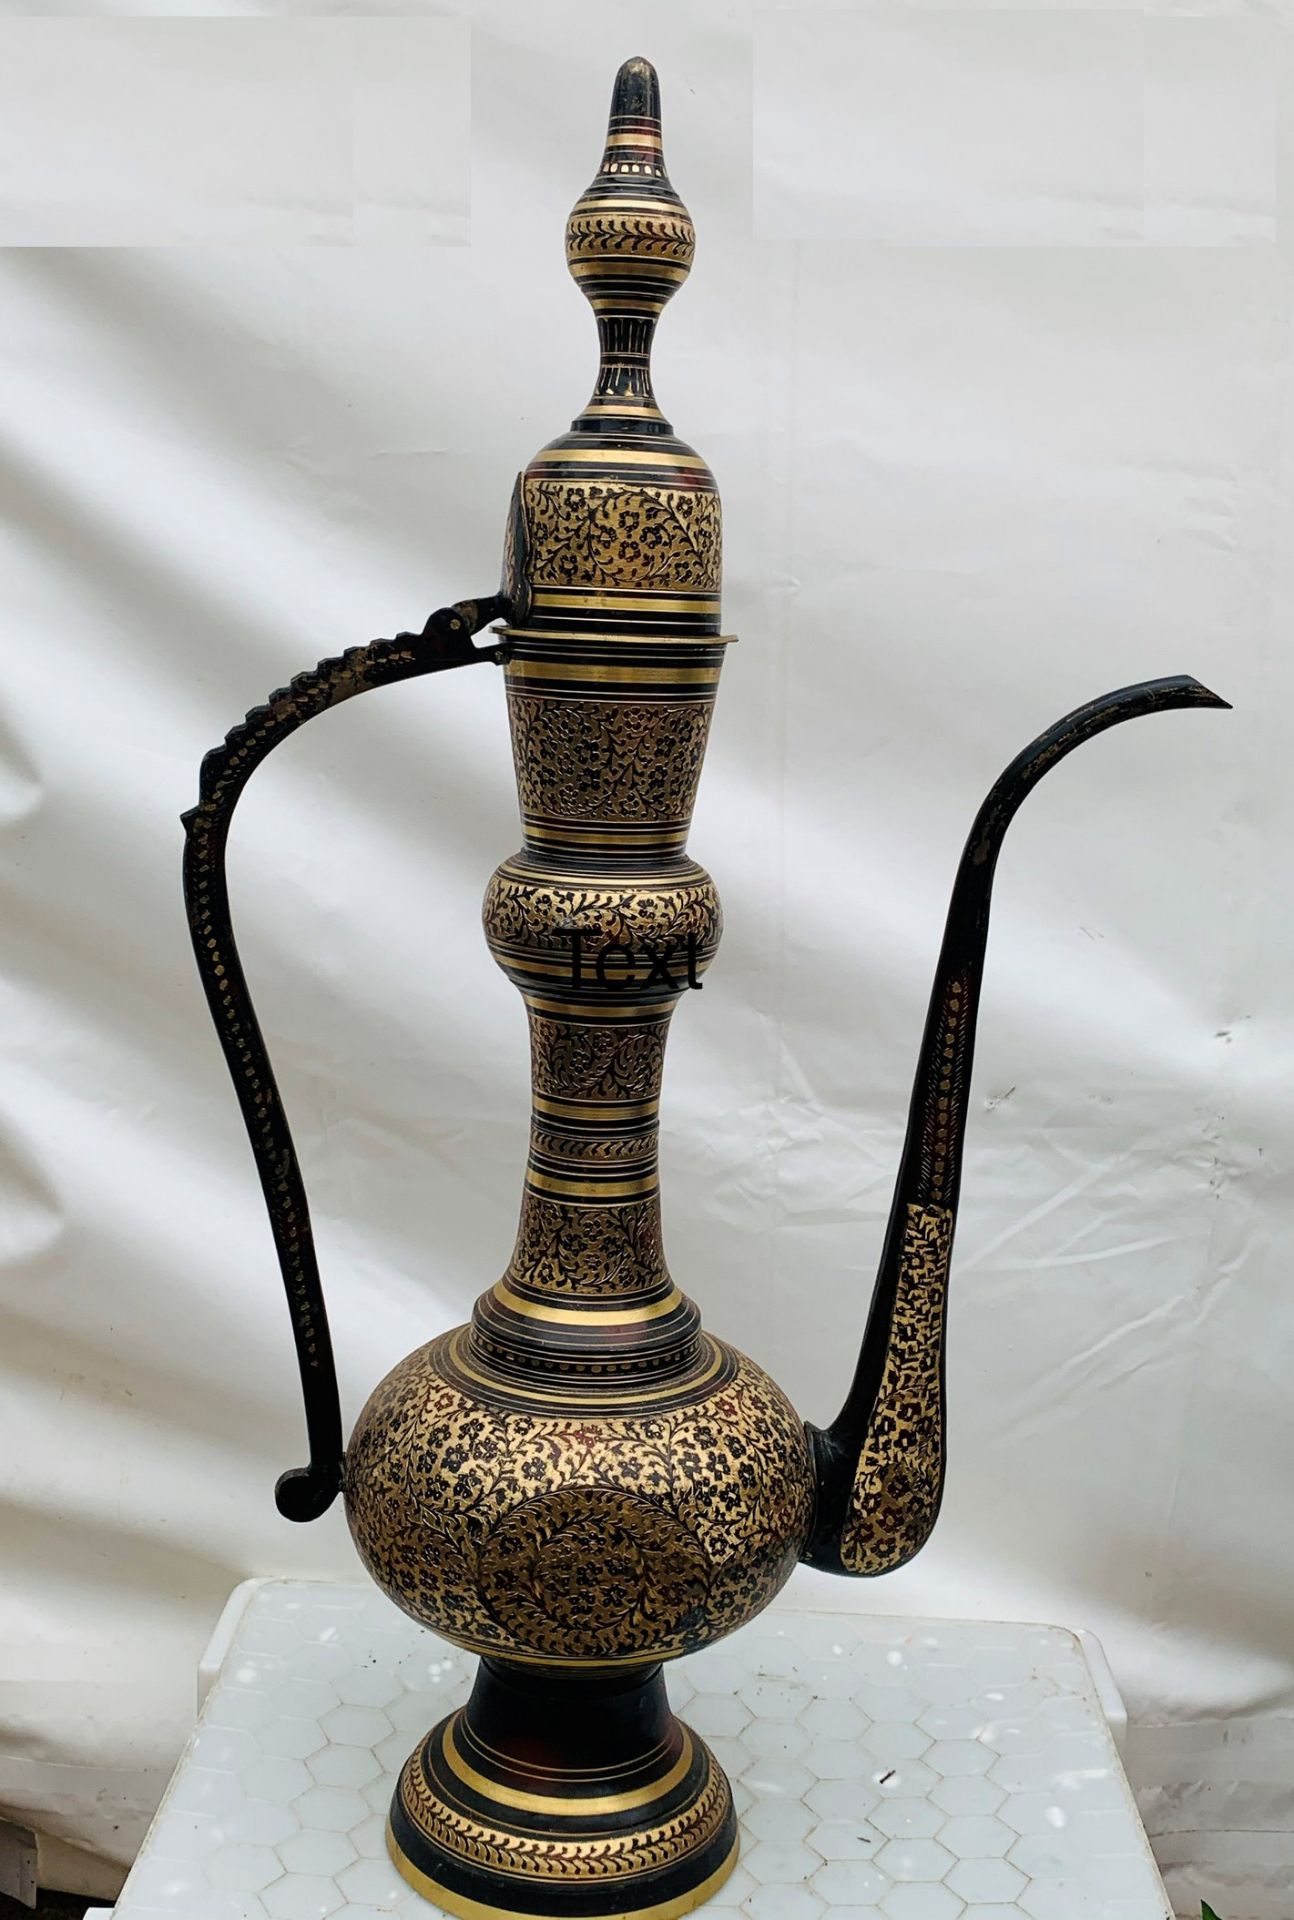 1 x Brass Arabian Jug - Dimensions: 121cm (h) x 67cm (w) - Pre-owned - CL548 - Location: Near Market